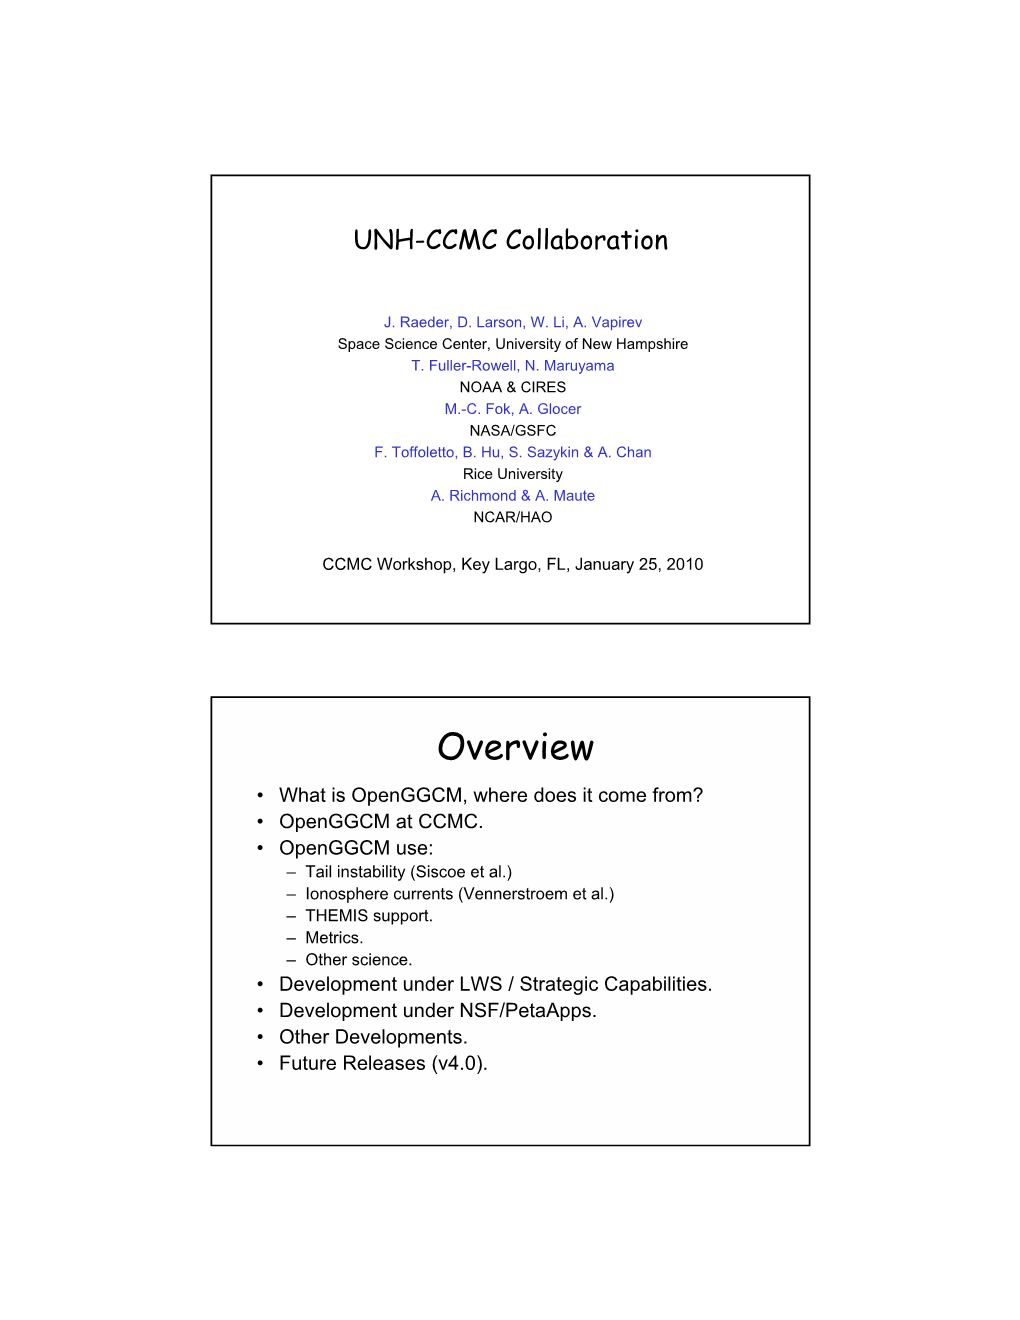 UNH-CCMC Collaboration, J. Raeder